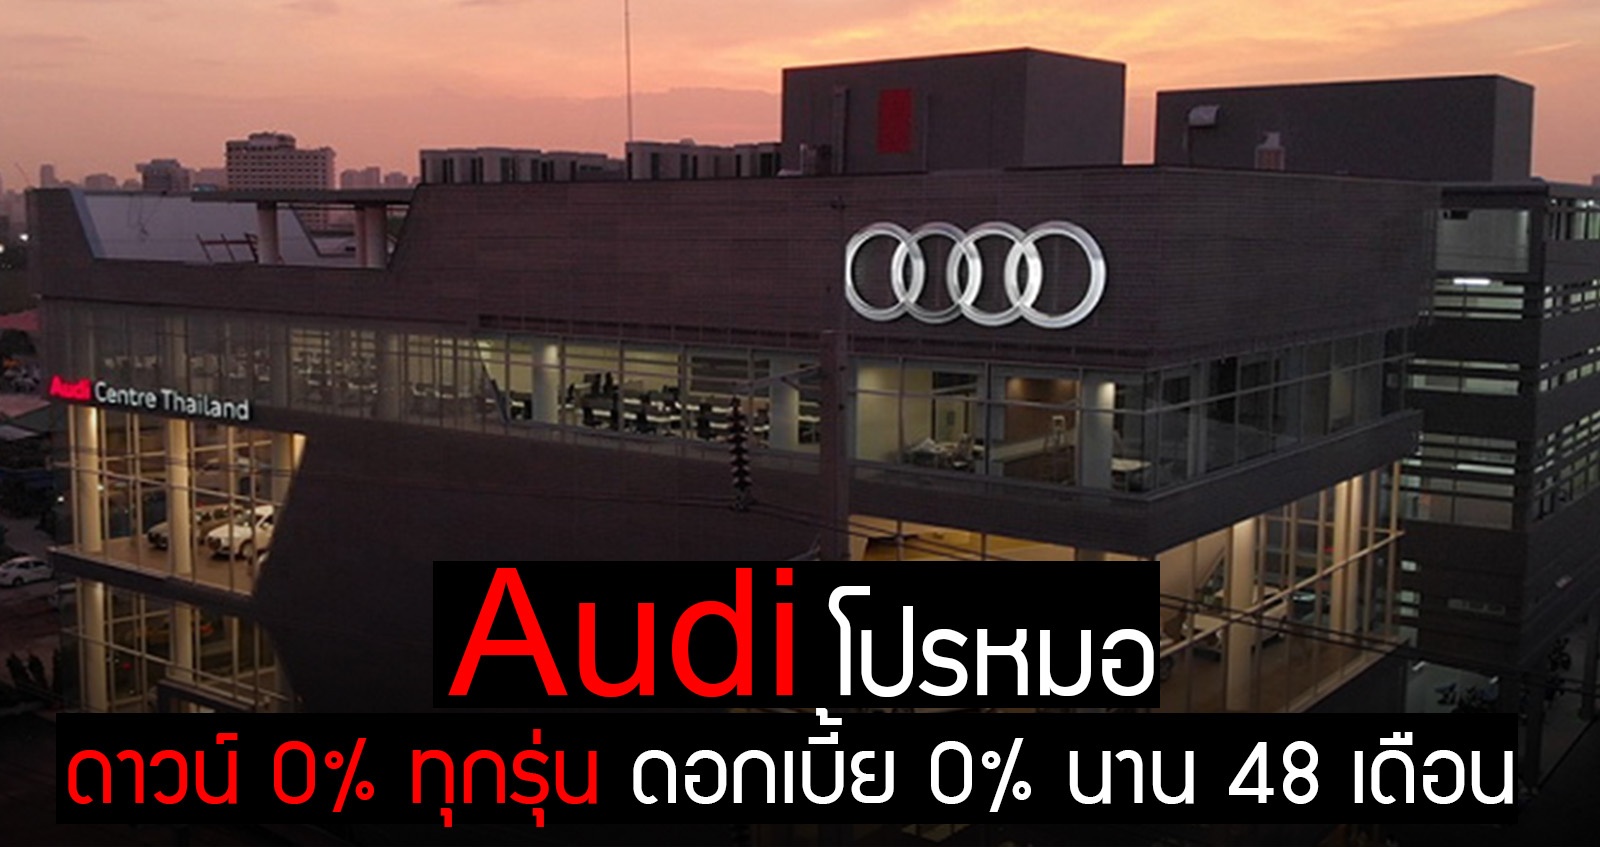 Audi ทุกรุ่น โปรหมอ ดาวน์ 0 % ดอกเบี้ย 0% นาน 4 ปี